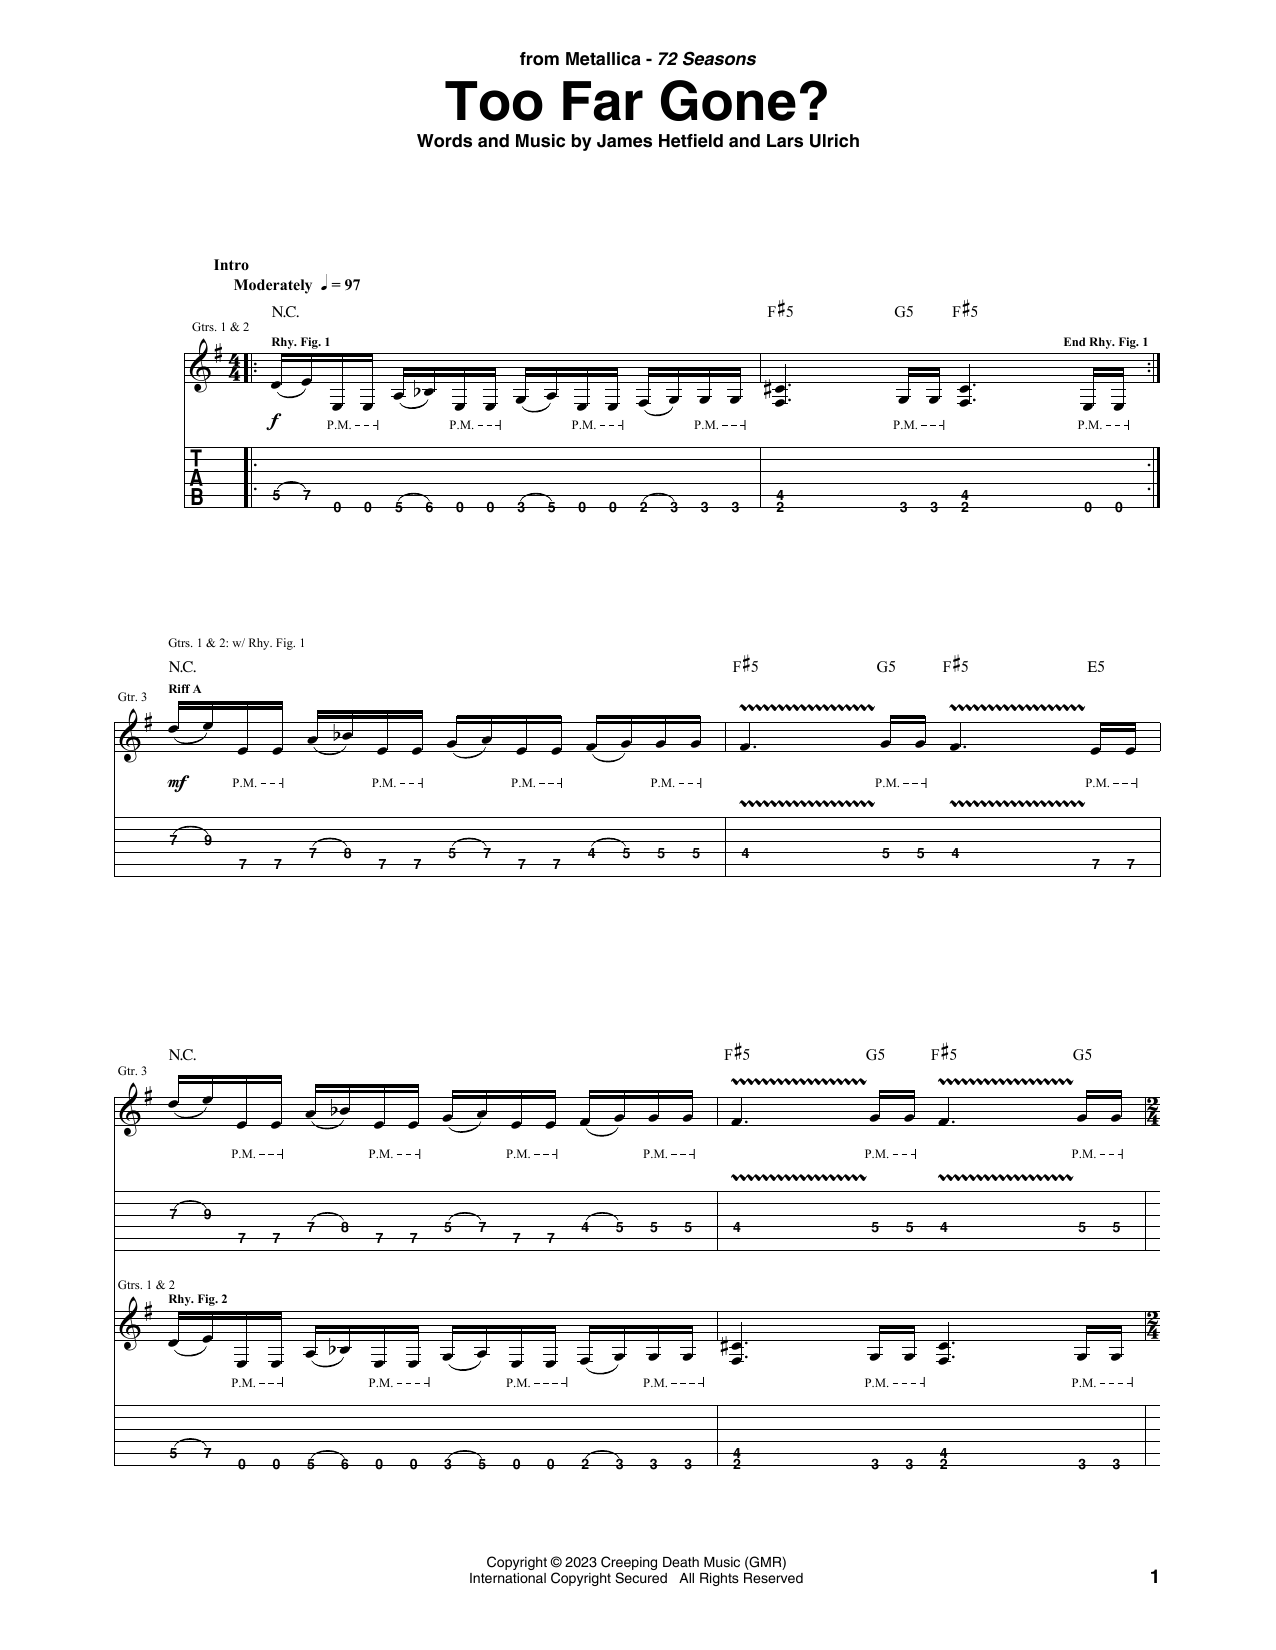 Metallica Too Far Gone? Sheet Music Notes & Chords for Guitar Tab - Download or Print PDF